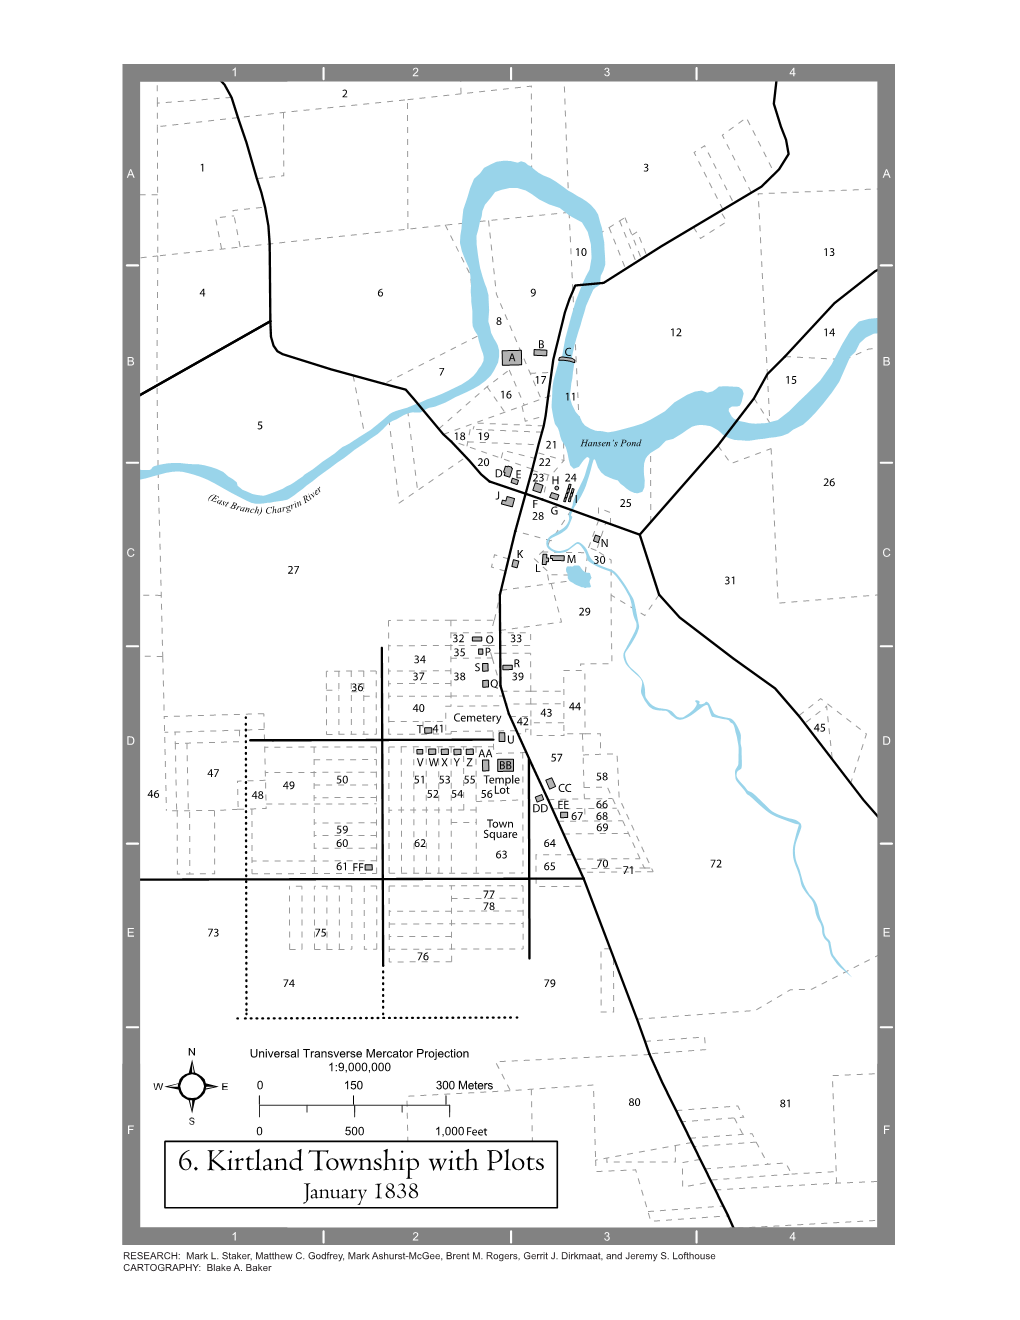 Kirtland Township with Plots, January 1838